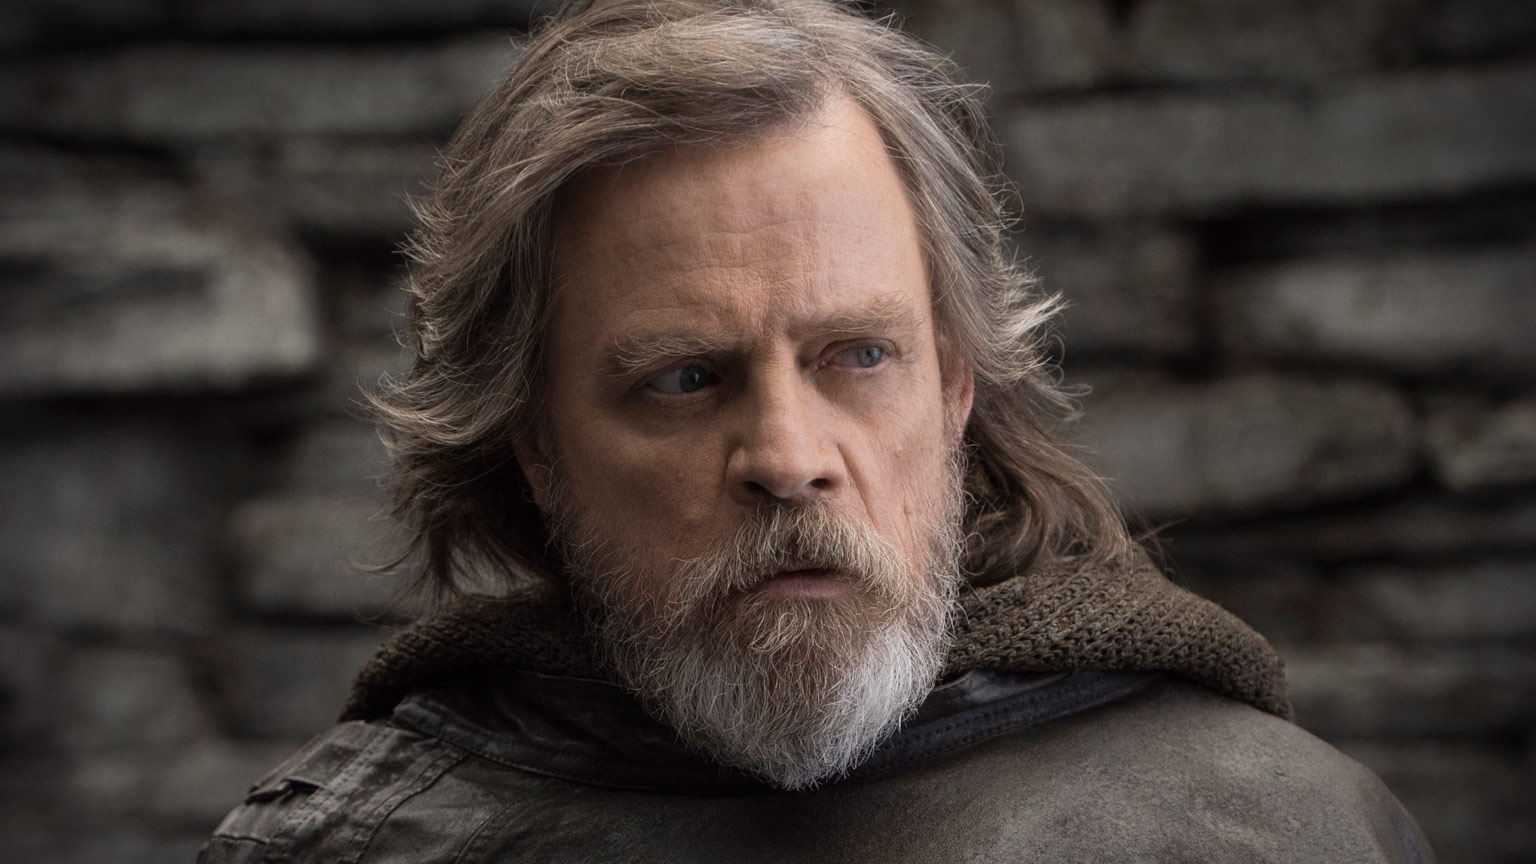 Mark Hamill is famous for portraying Luke Skywalker in the Star Wars franchise.